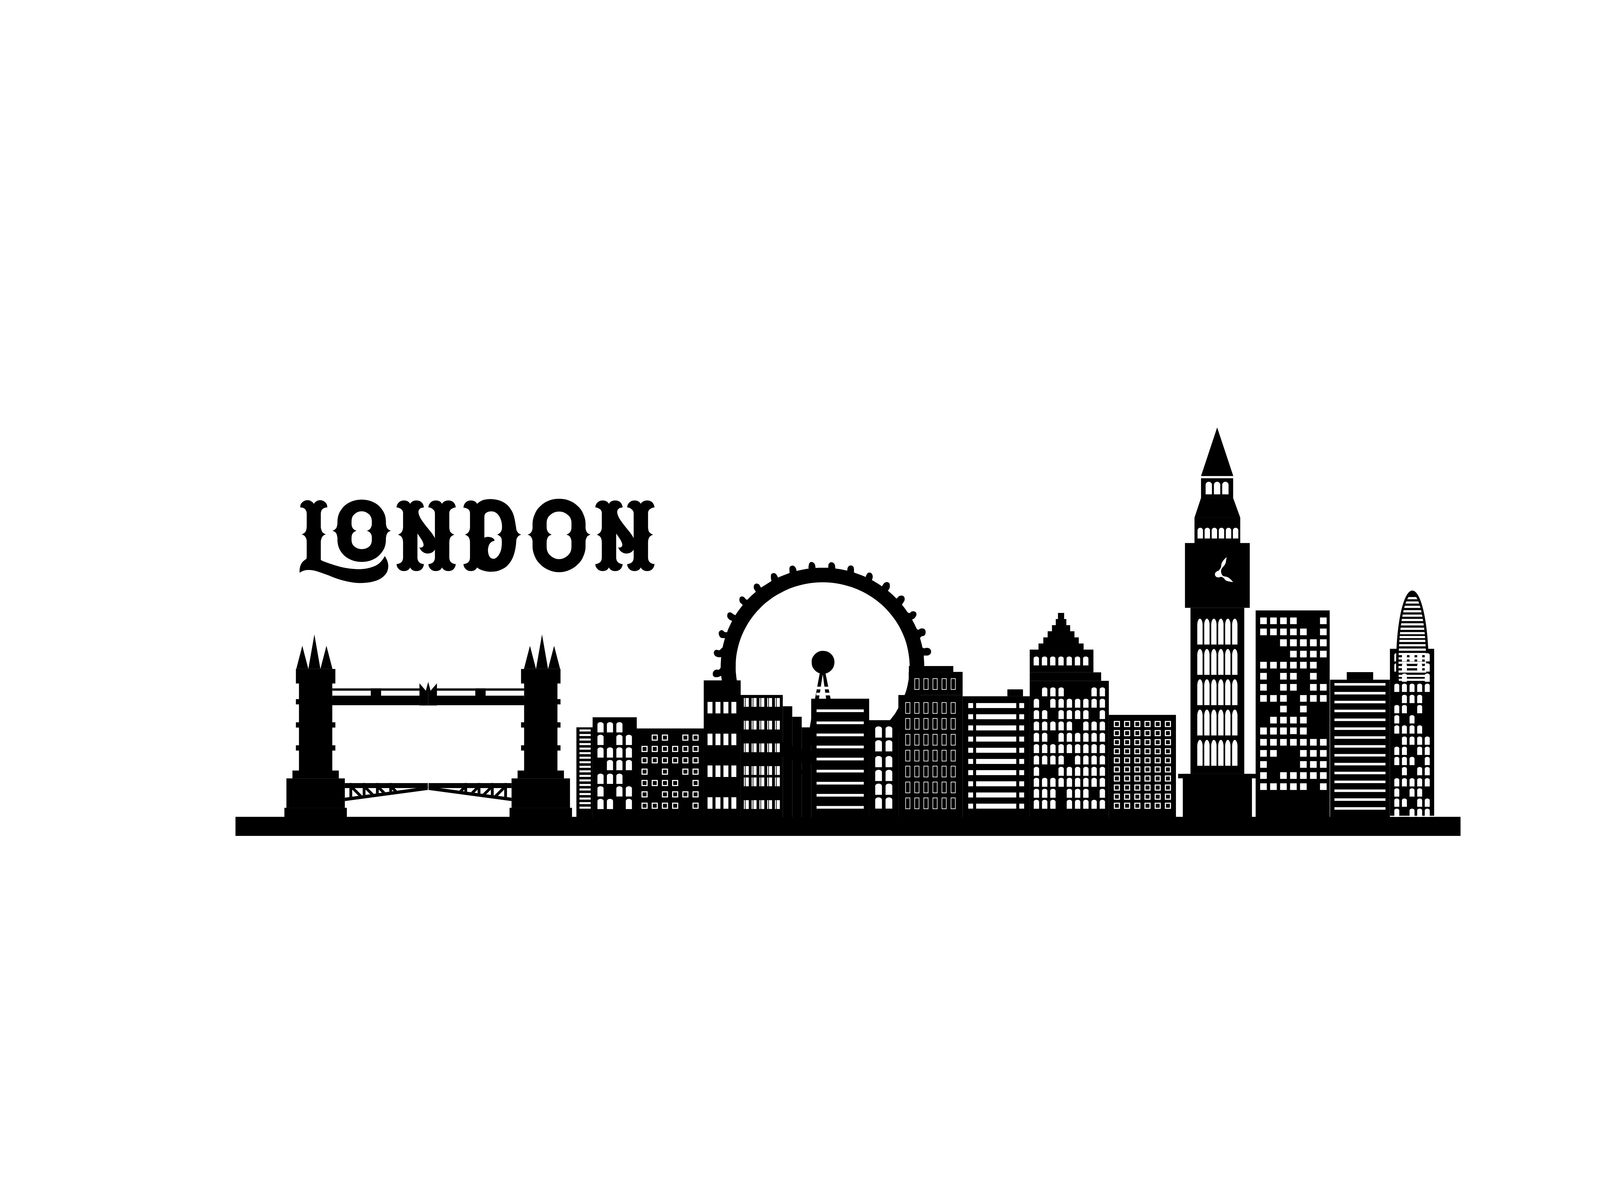 London city skyline Vector illustration by Bolasz Edogawa on Dribbble